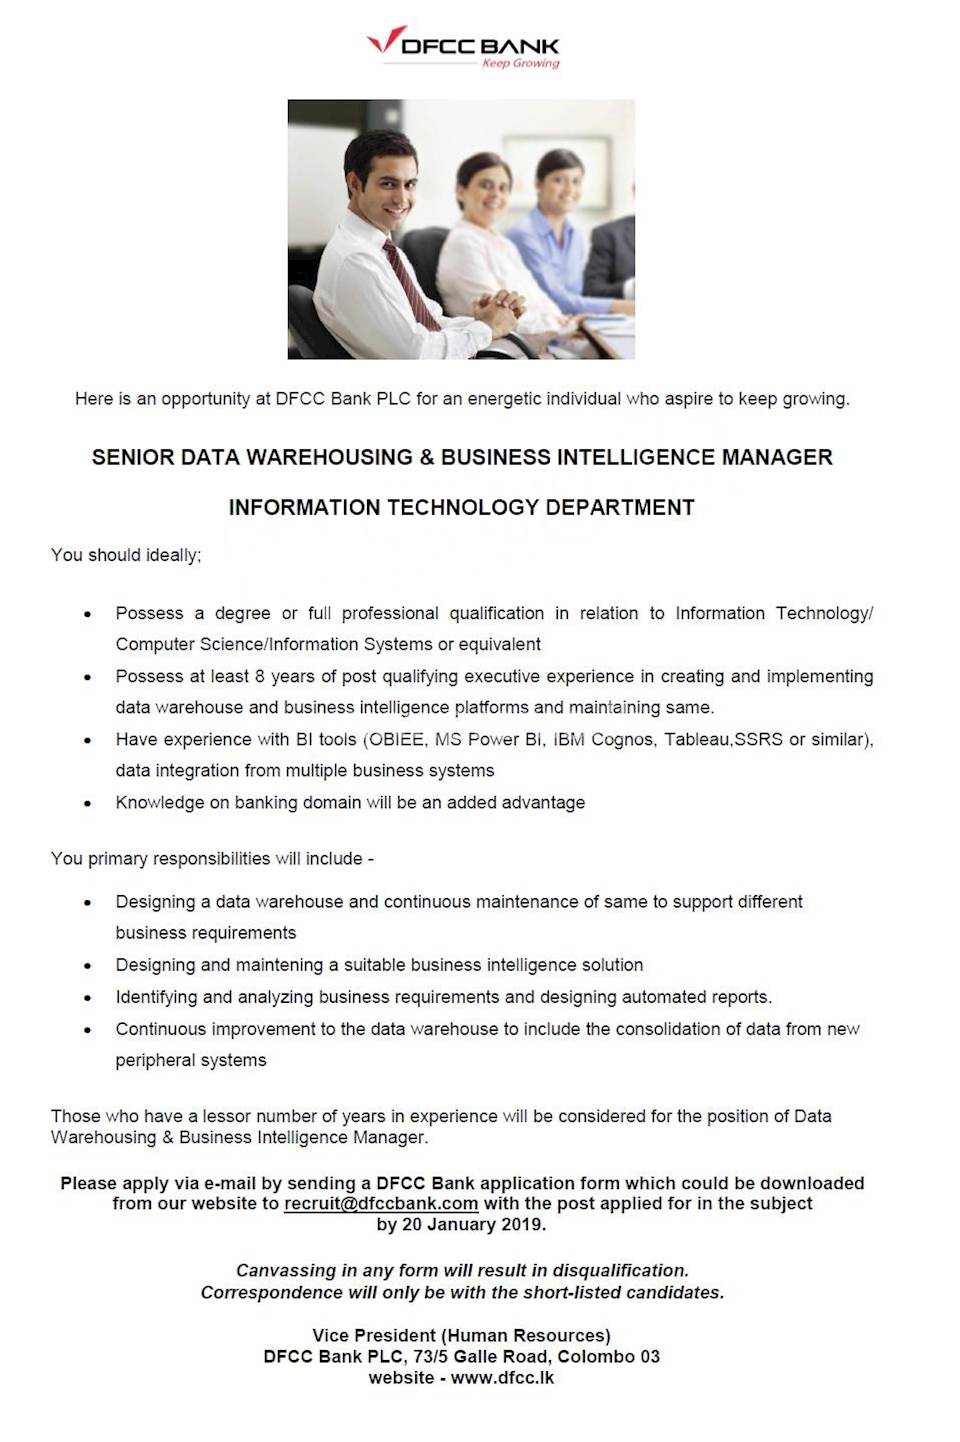 Senior Data Warehousing and Business Intelligence Manager